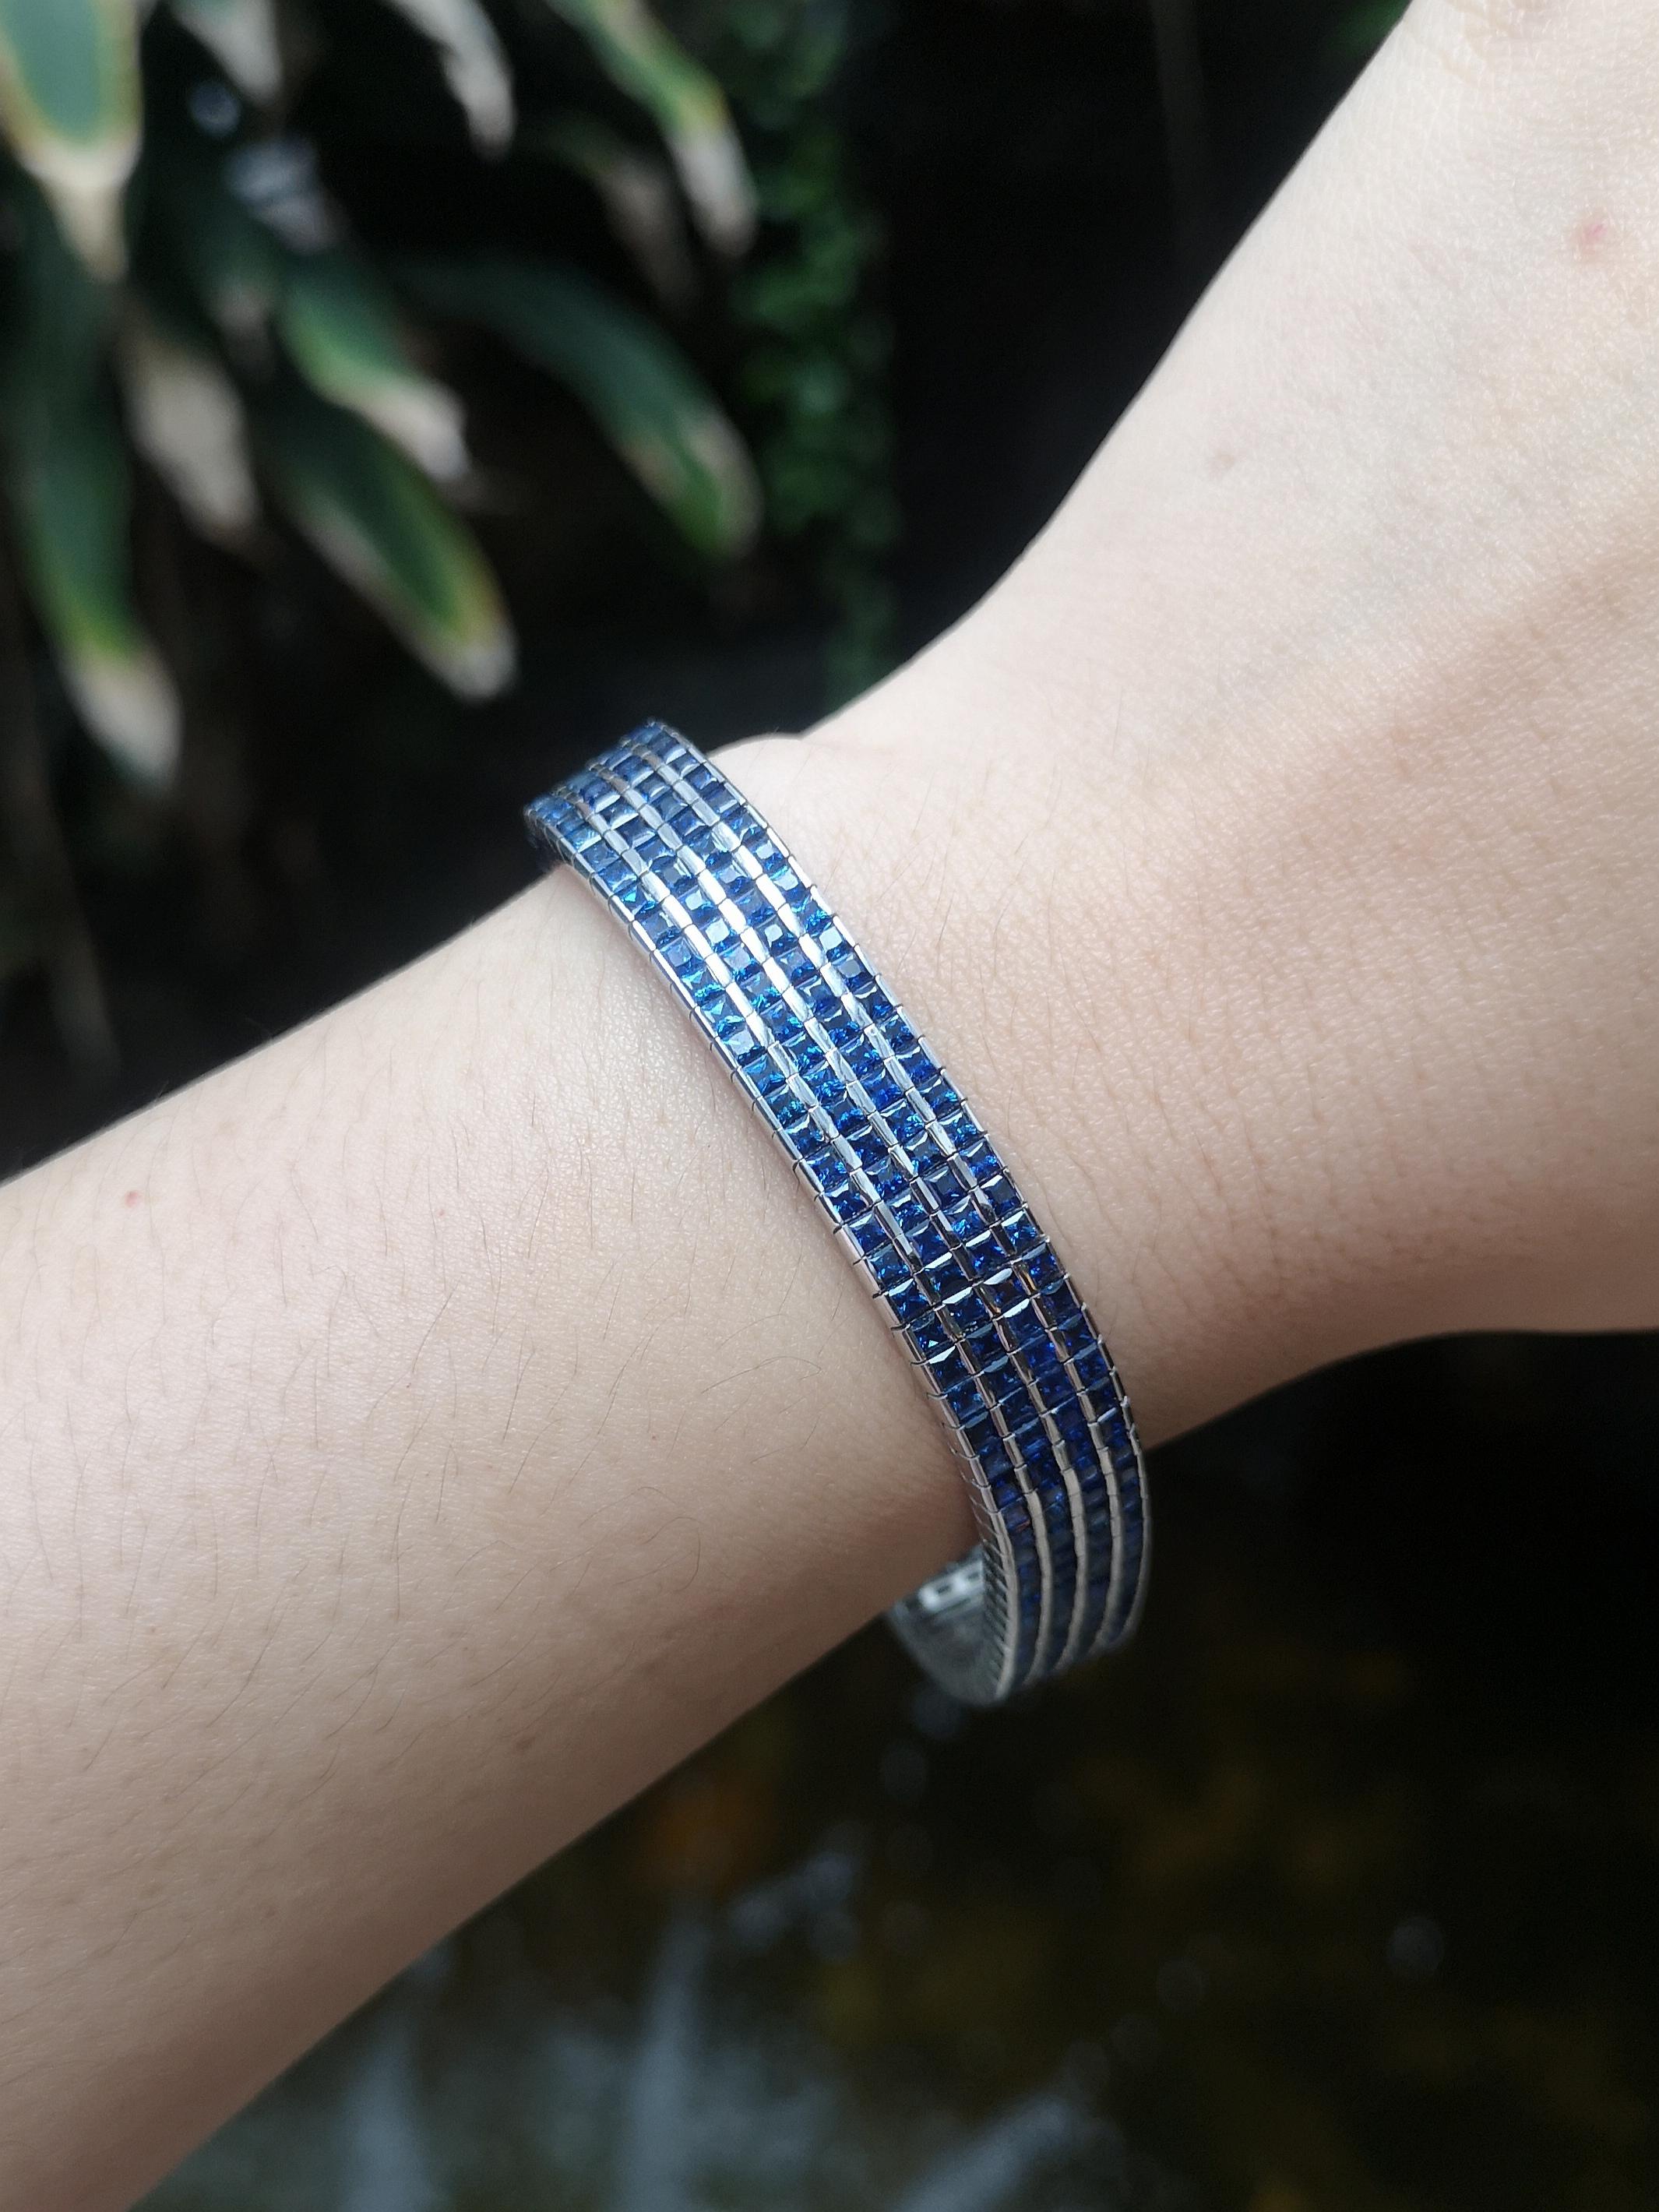 Blue Sapphire 19.41 carats Bracelet set in 18 Karat White Gold Settings

Width:  1.1 cm 
Length: 18.0 cm
Total Weight: 67.52 grams

